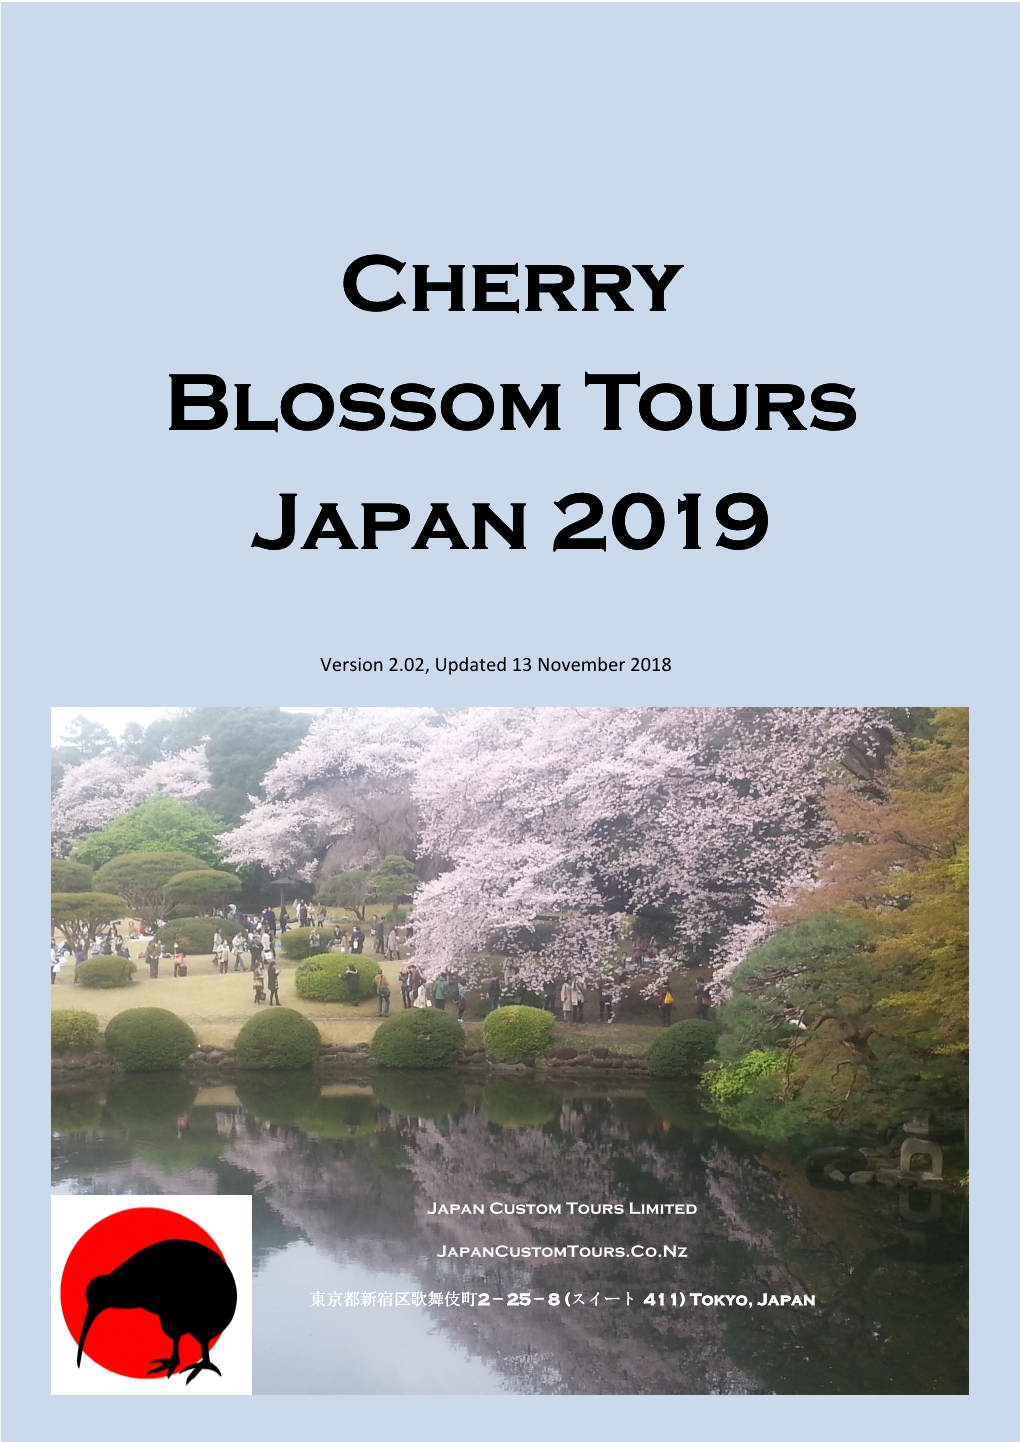 Cherry Blossom Tours Blossom Tours Japan 2019 Japan 2019